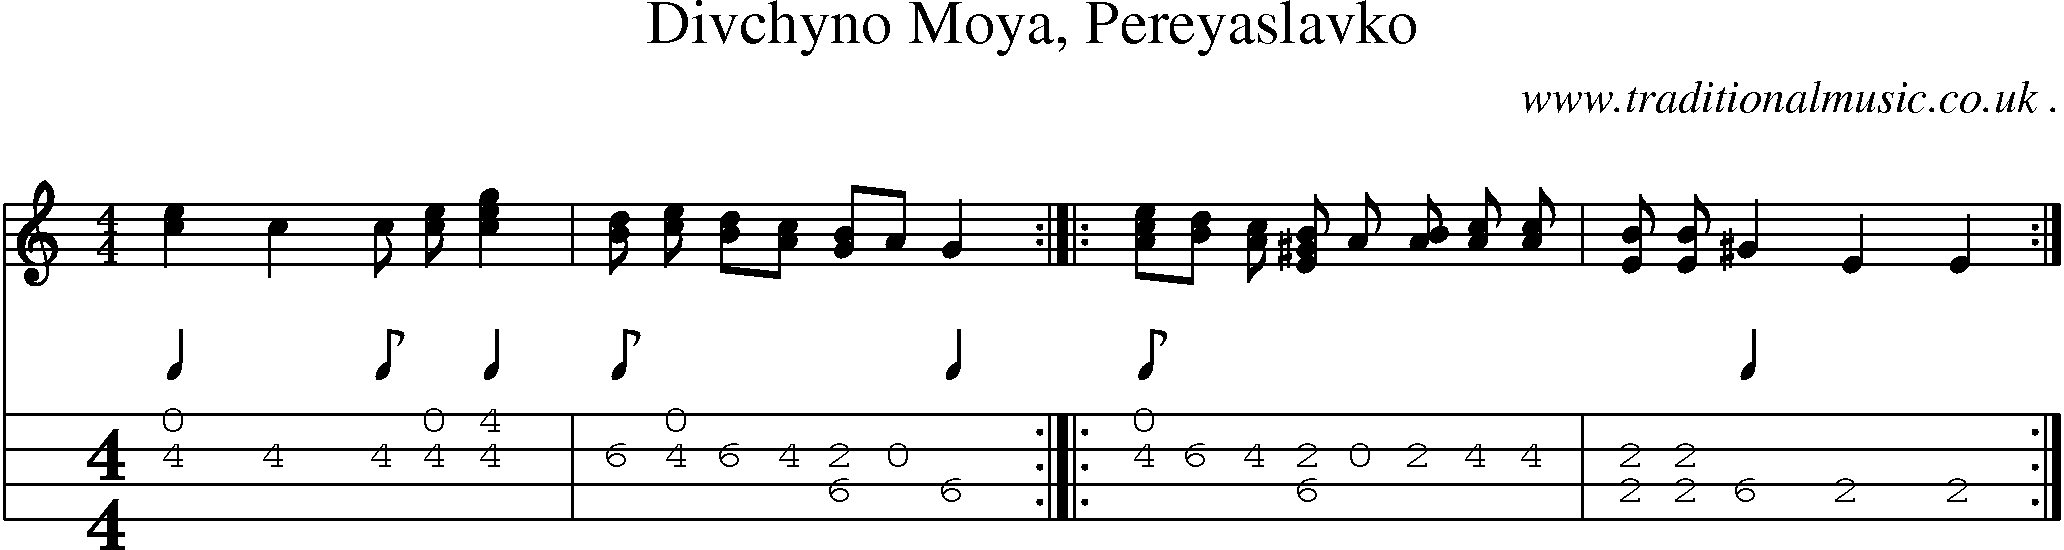 Sheet-Music and Mandolin Tabs for Divchyno Moya Pereyaslavko